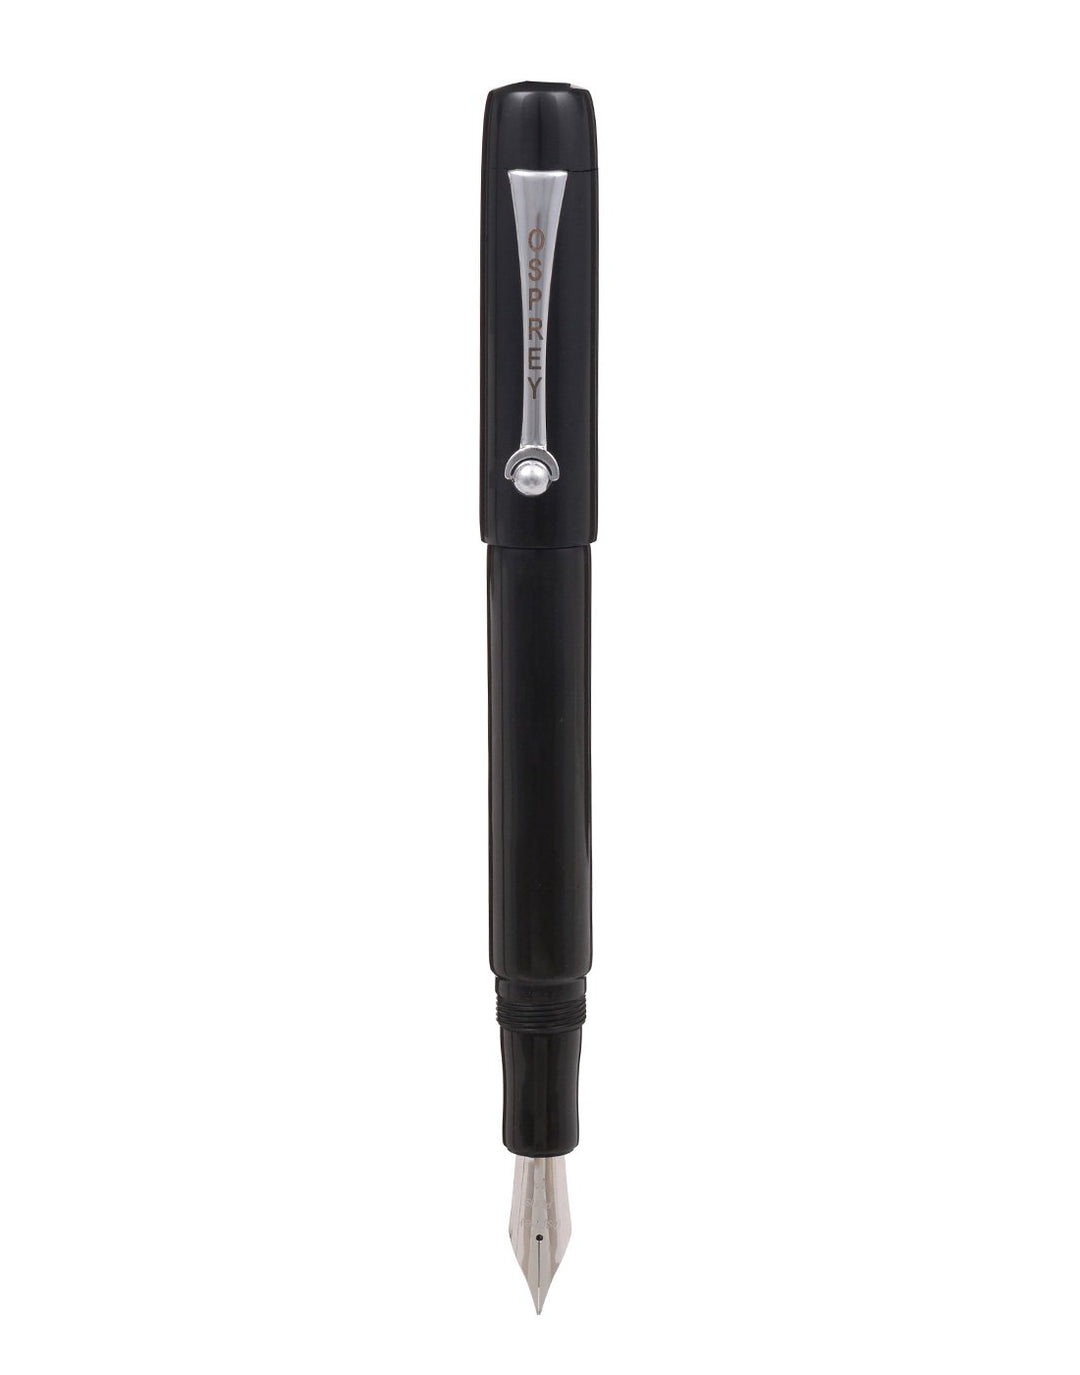 OSPREY PENS - MILANO Fountain Pen "Black Ebonite" With Standard And Flex Nib Options - Buchan's Kerrisdale Stationery